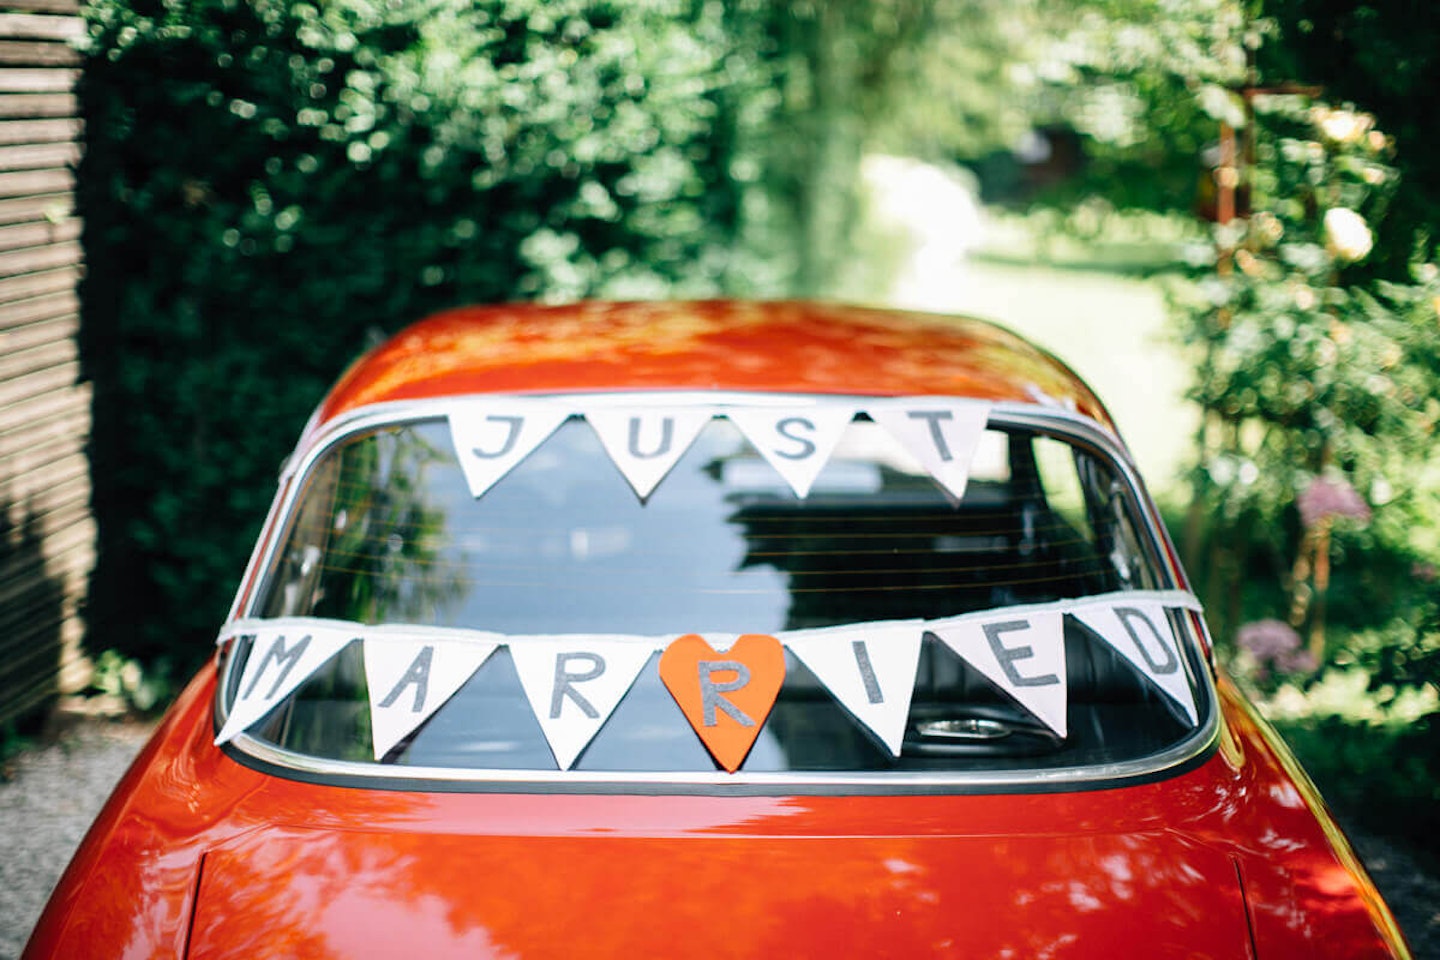 Wedding car decorations